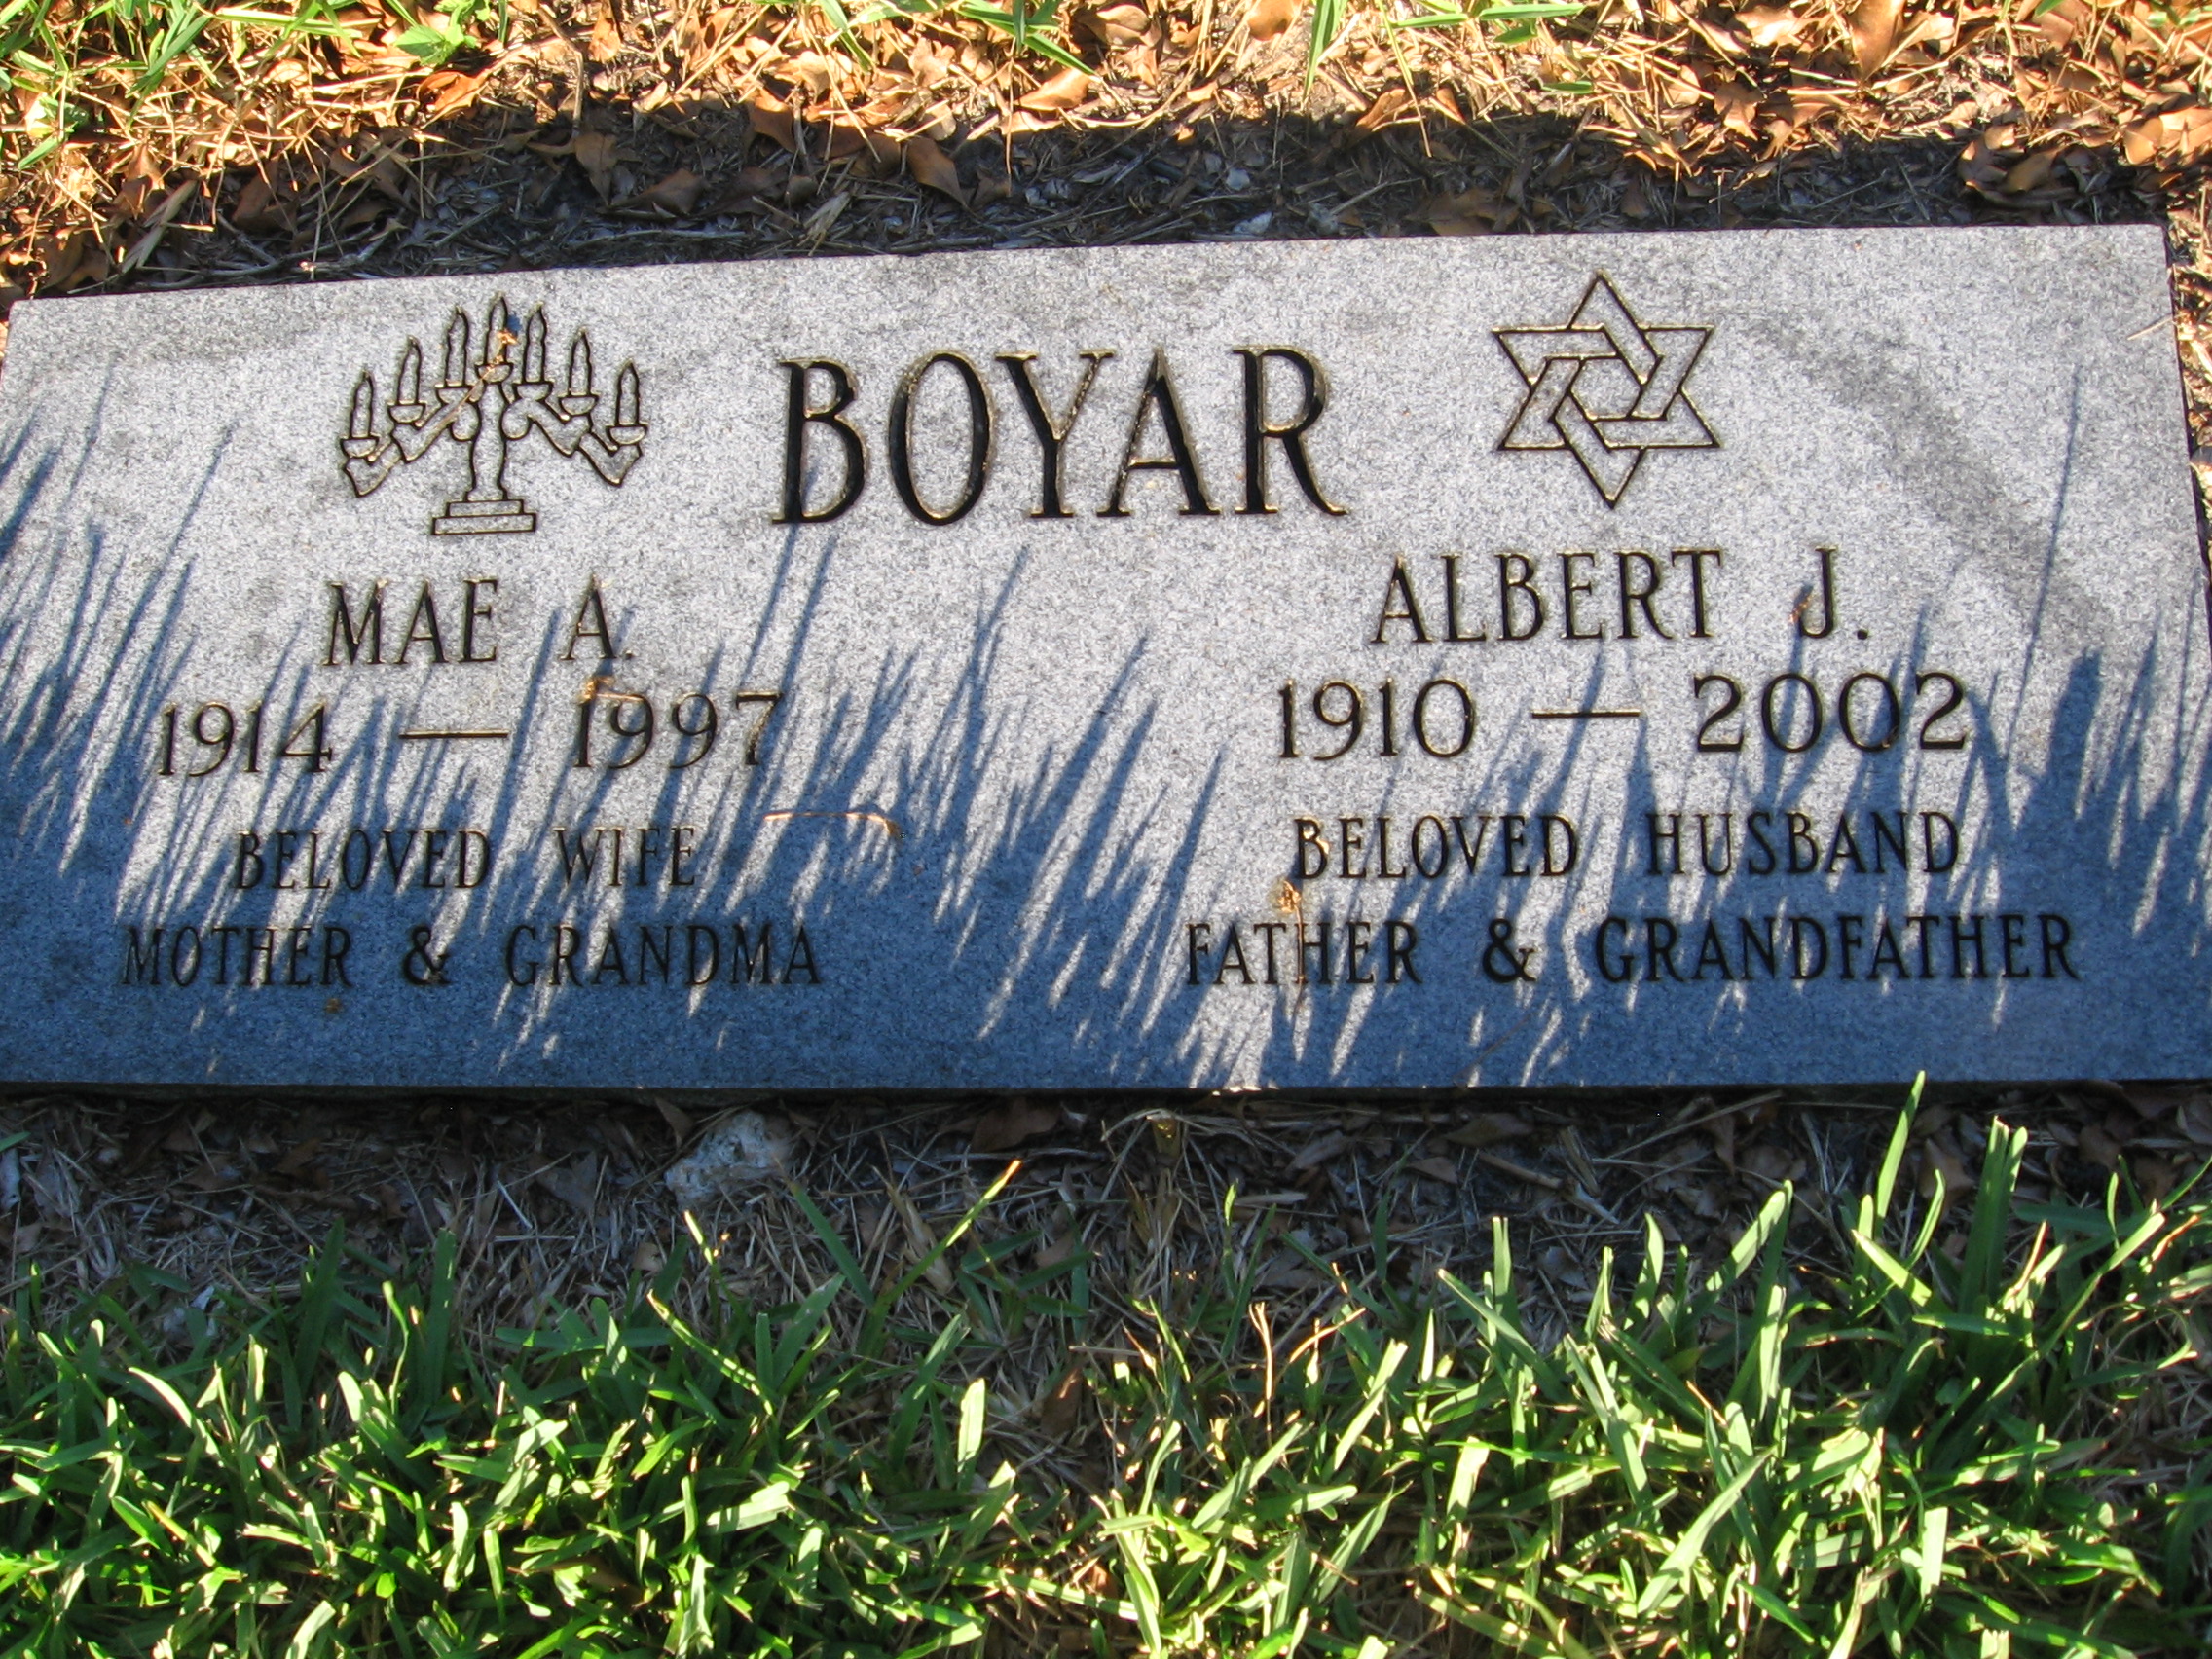 Albert J Boyar